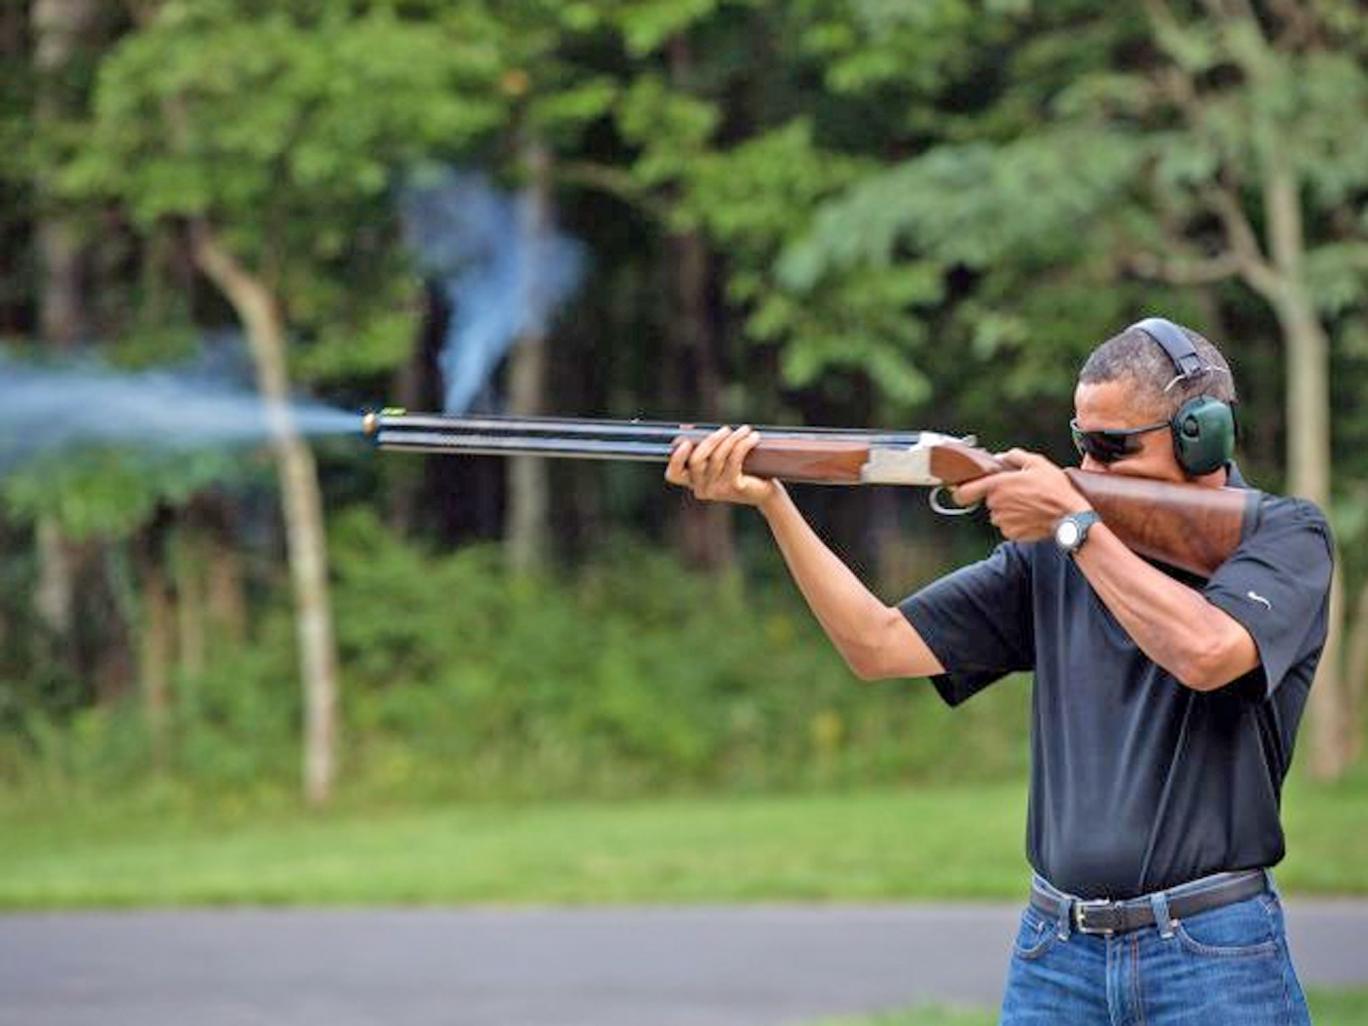 Many legal ammo manufacturers now deemed “criminals” under new Obama regulations